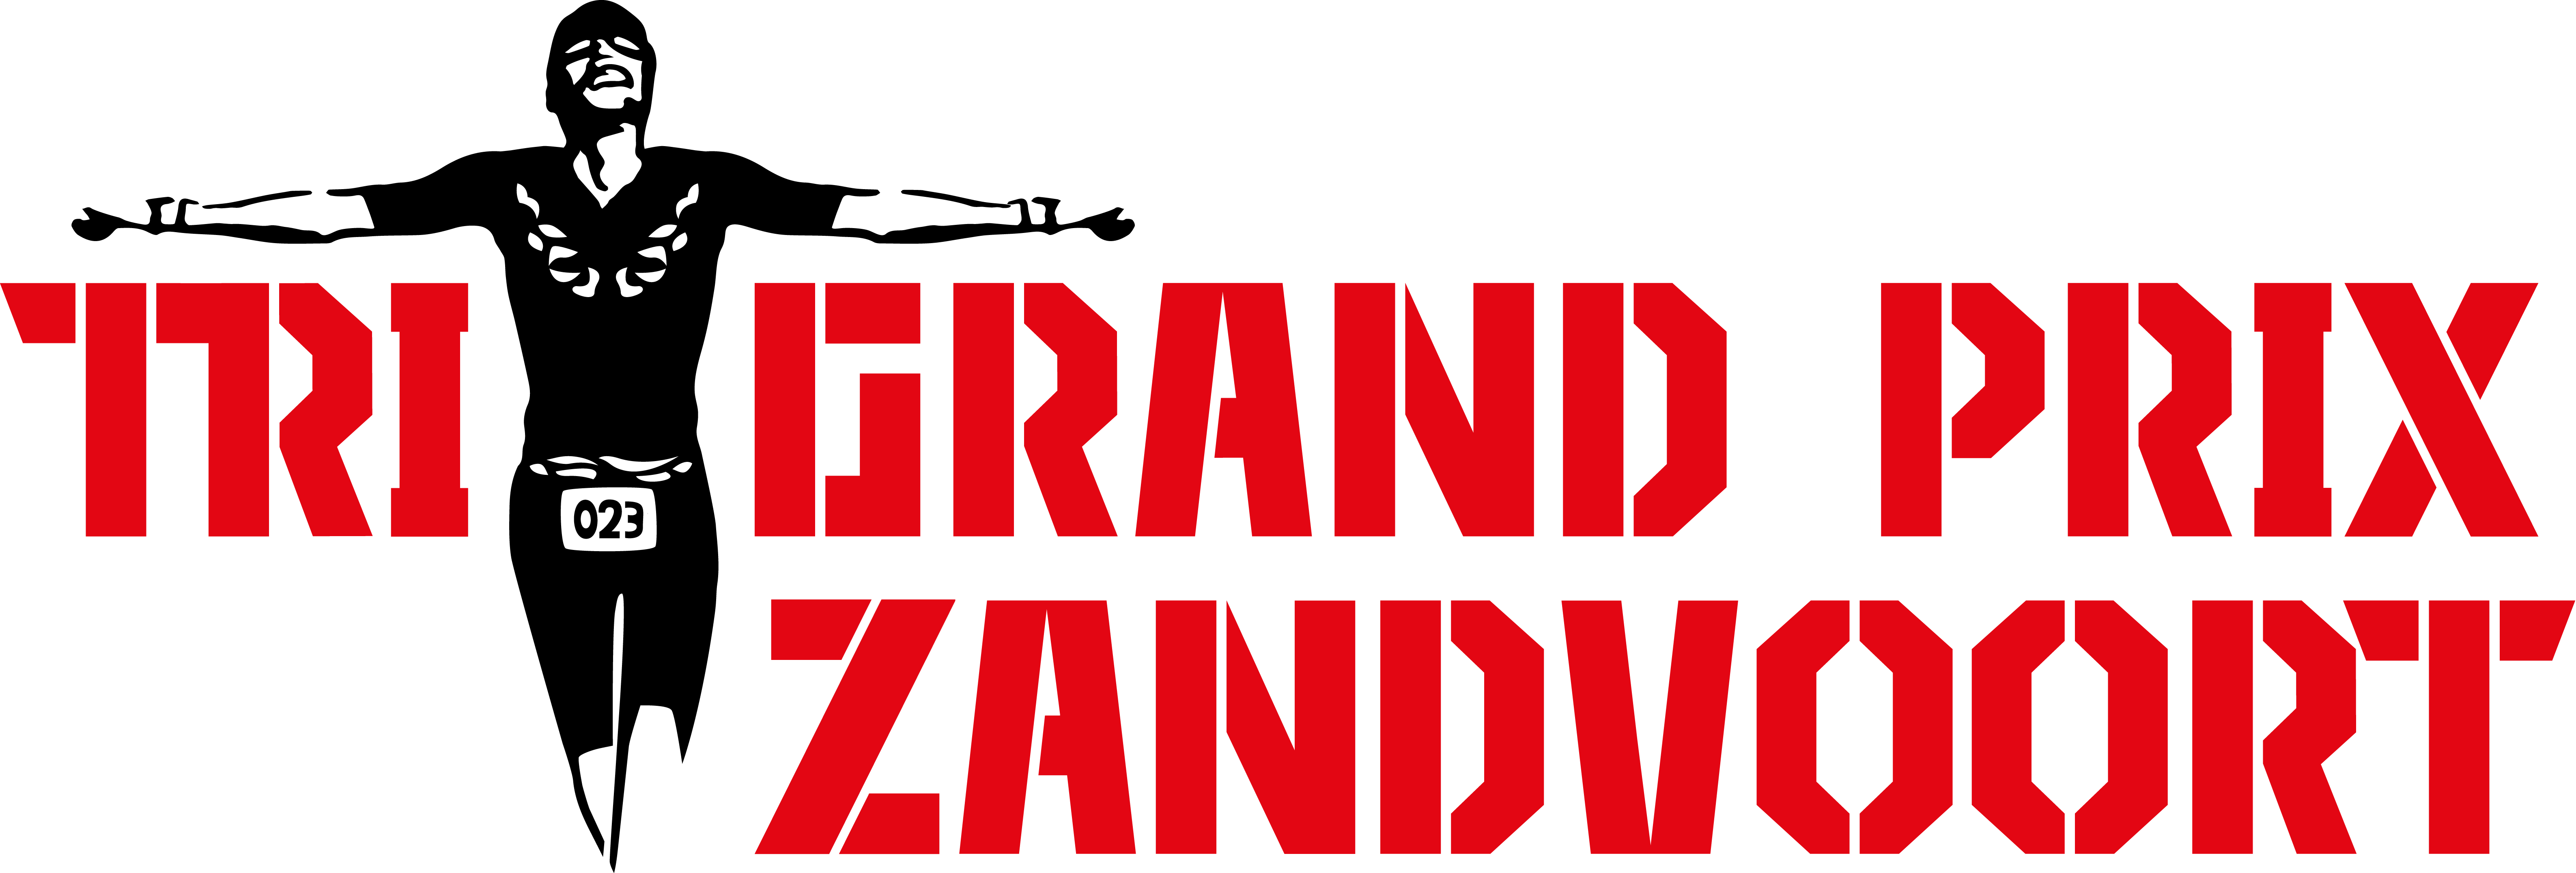 Logo Zawodów TRI GRAND PRIX ZANDVOORT Triathlon 2020